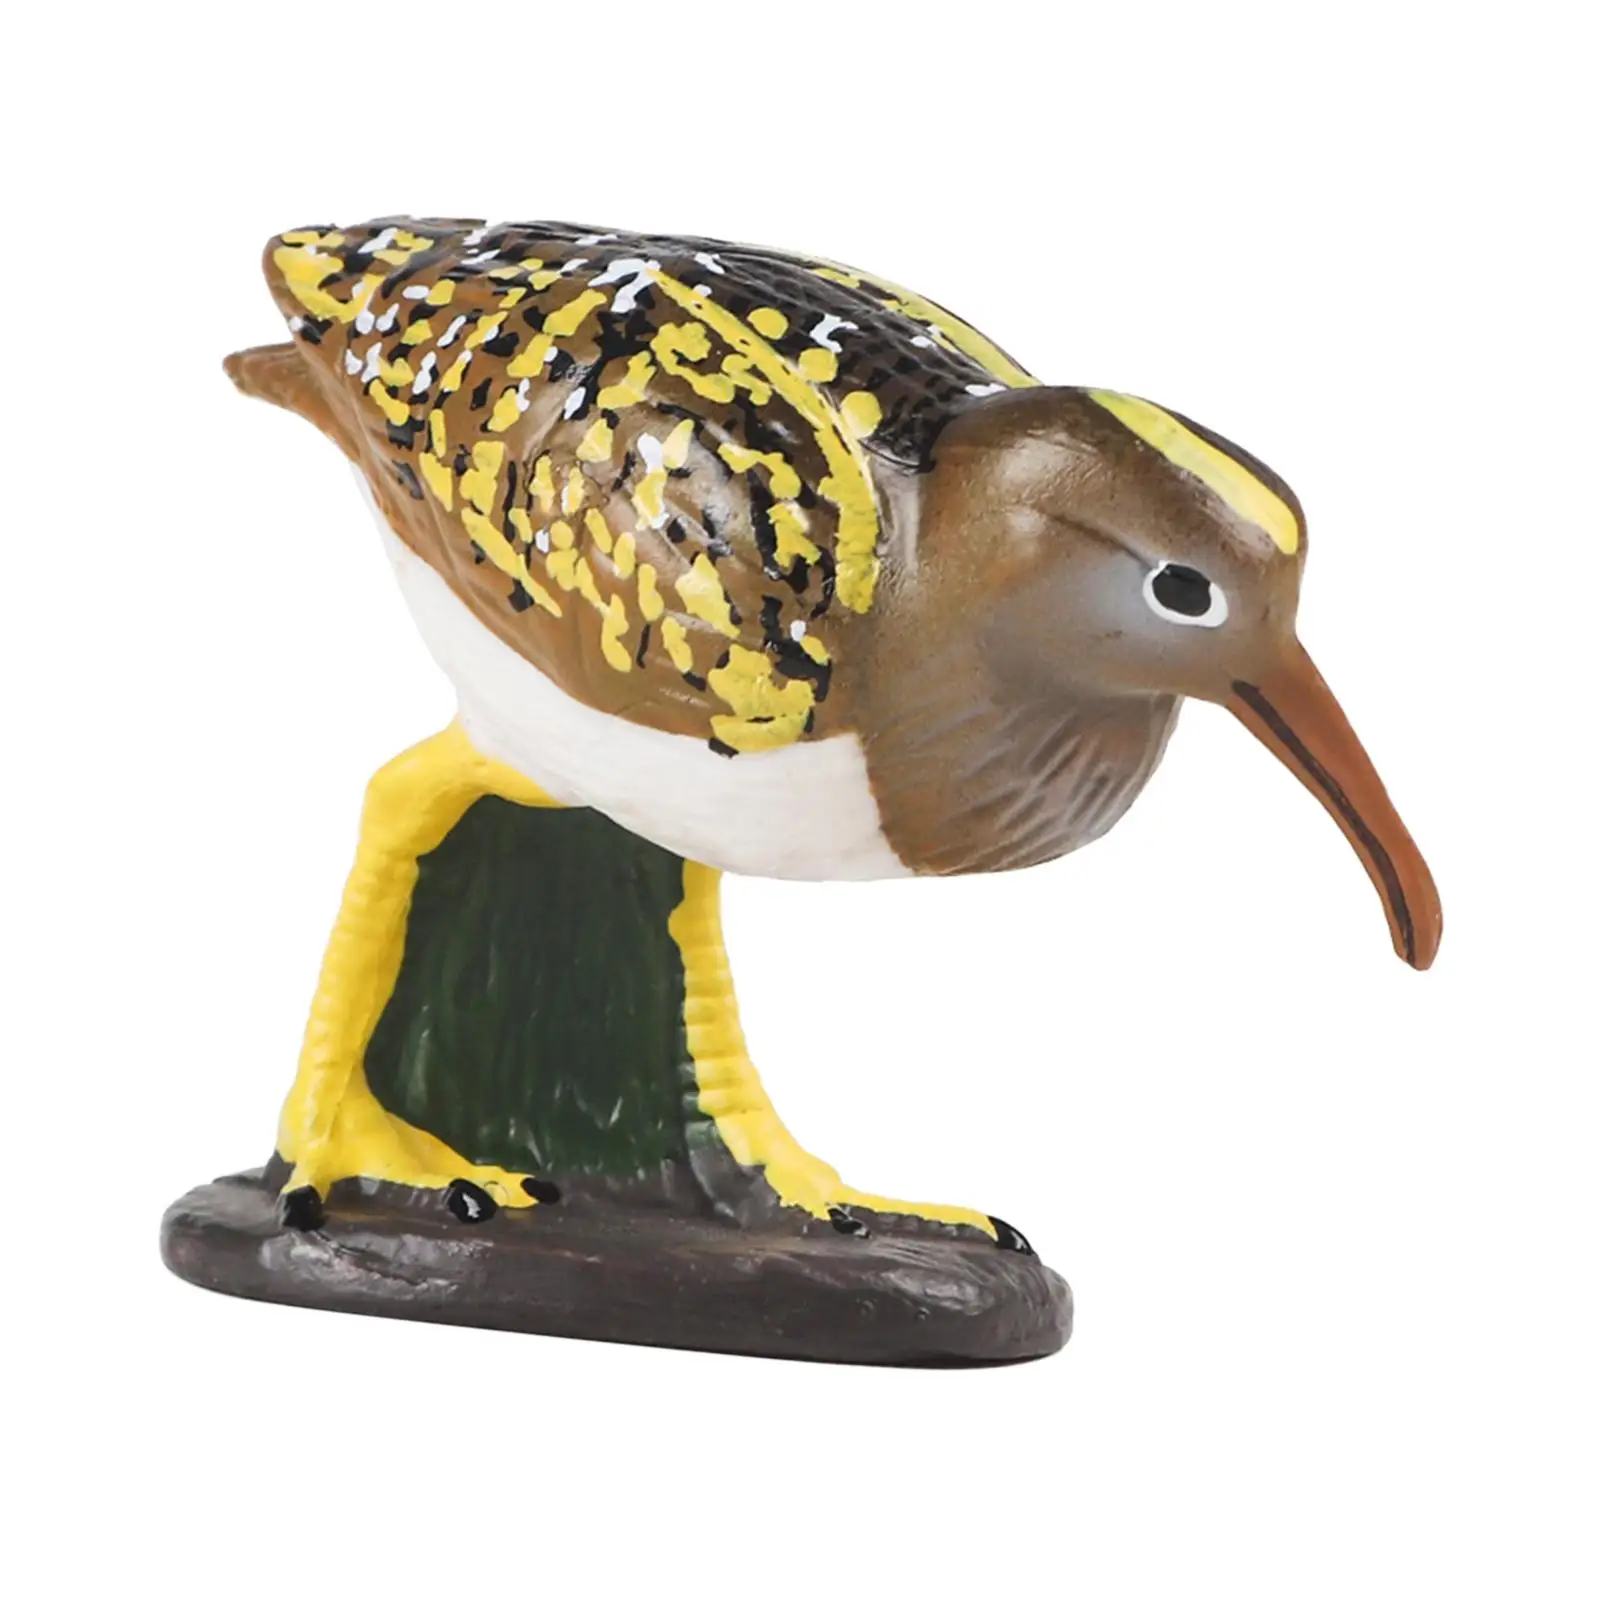 Durable bird figure, fine workmanship, cute educational toy, bird model, bird